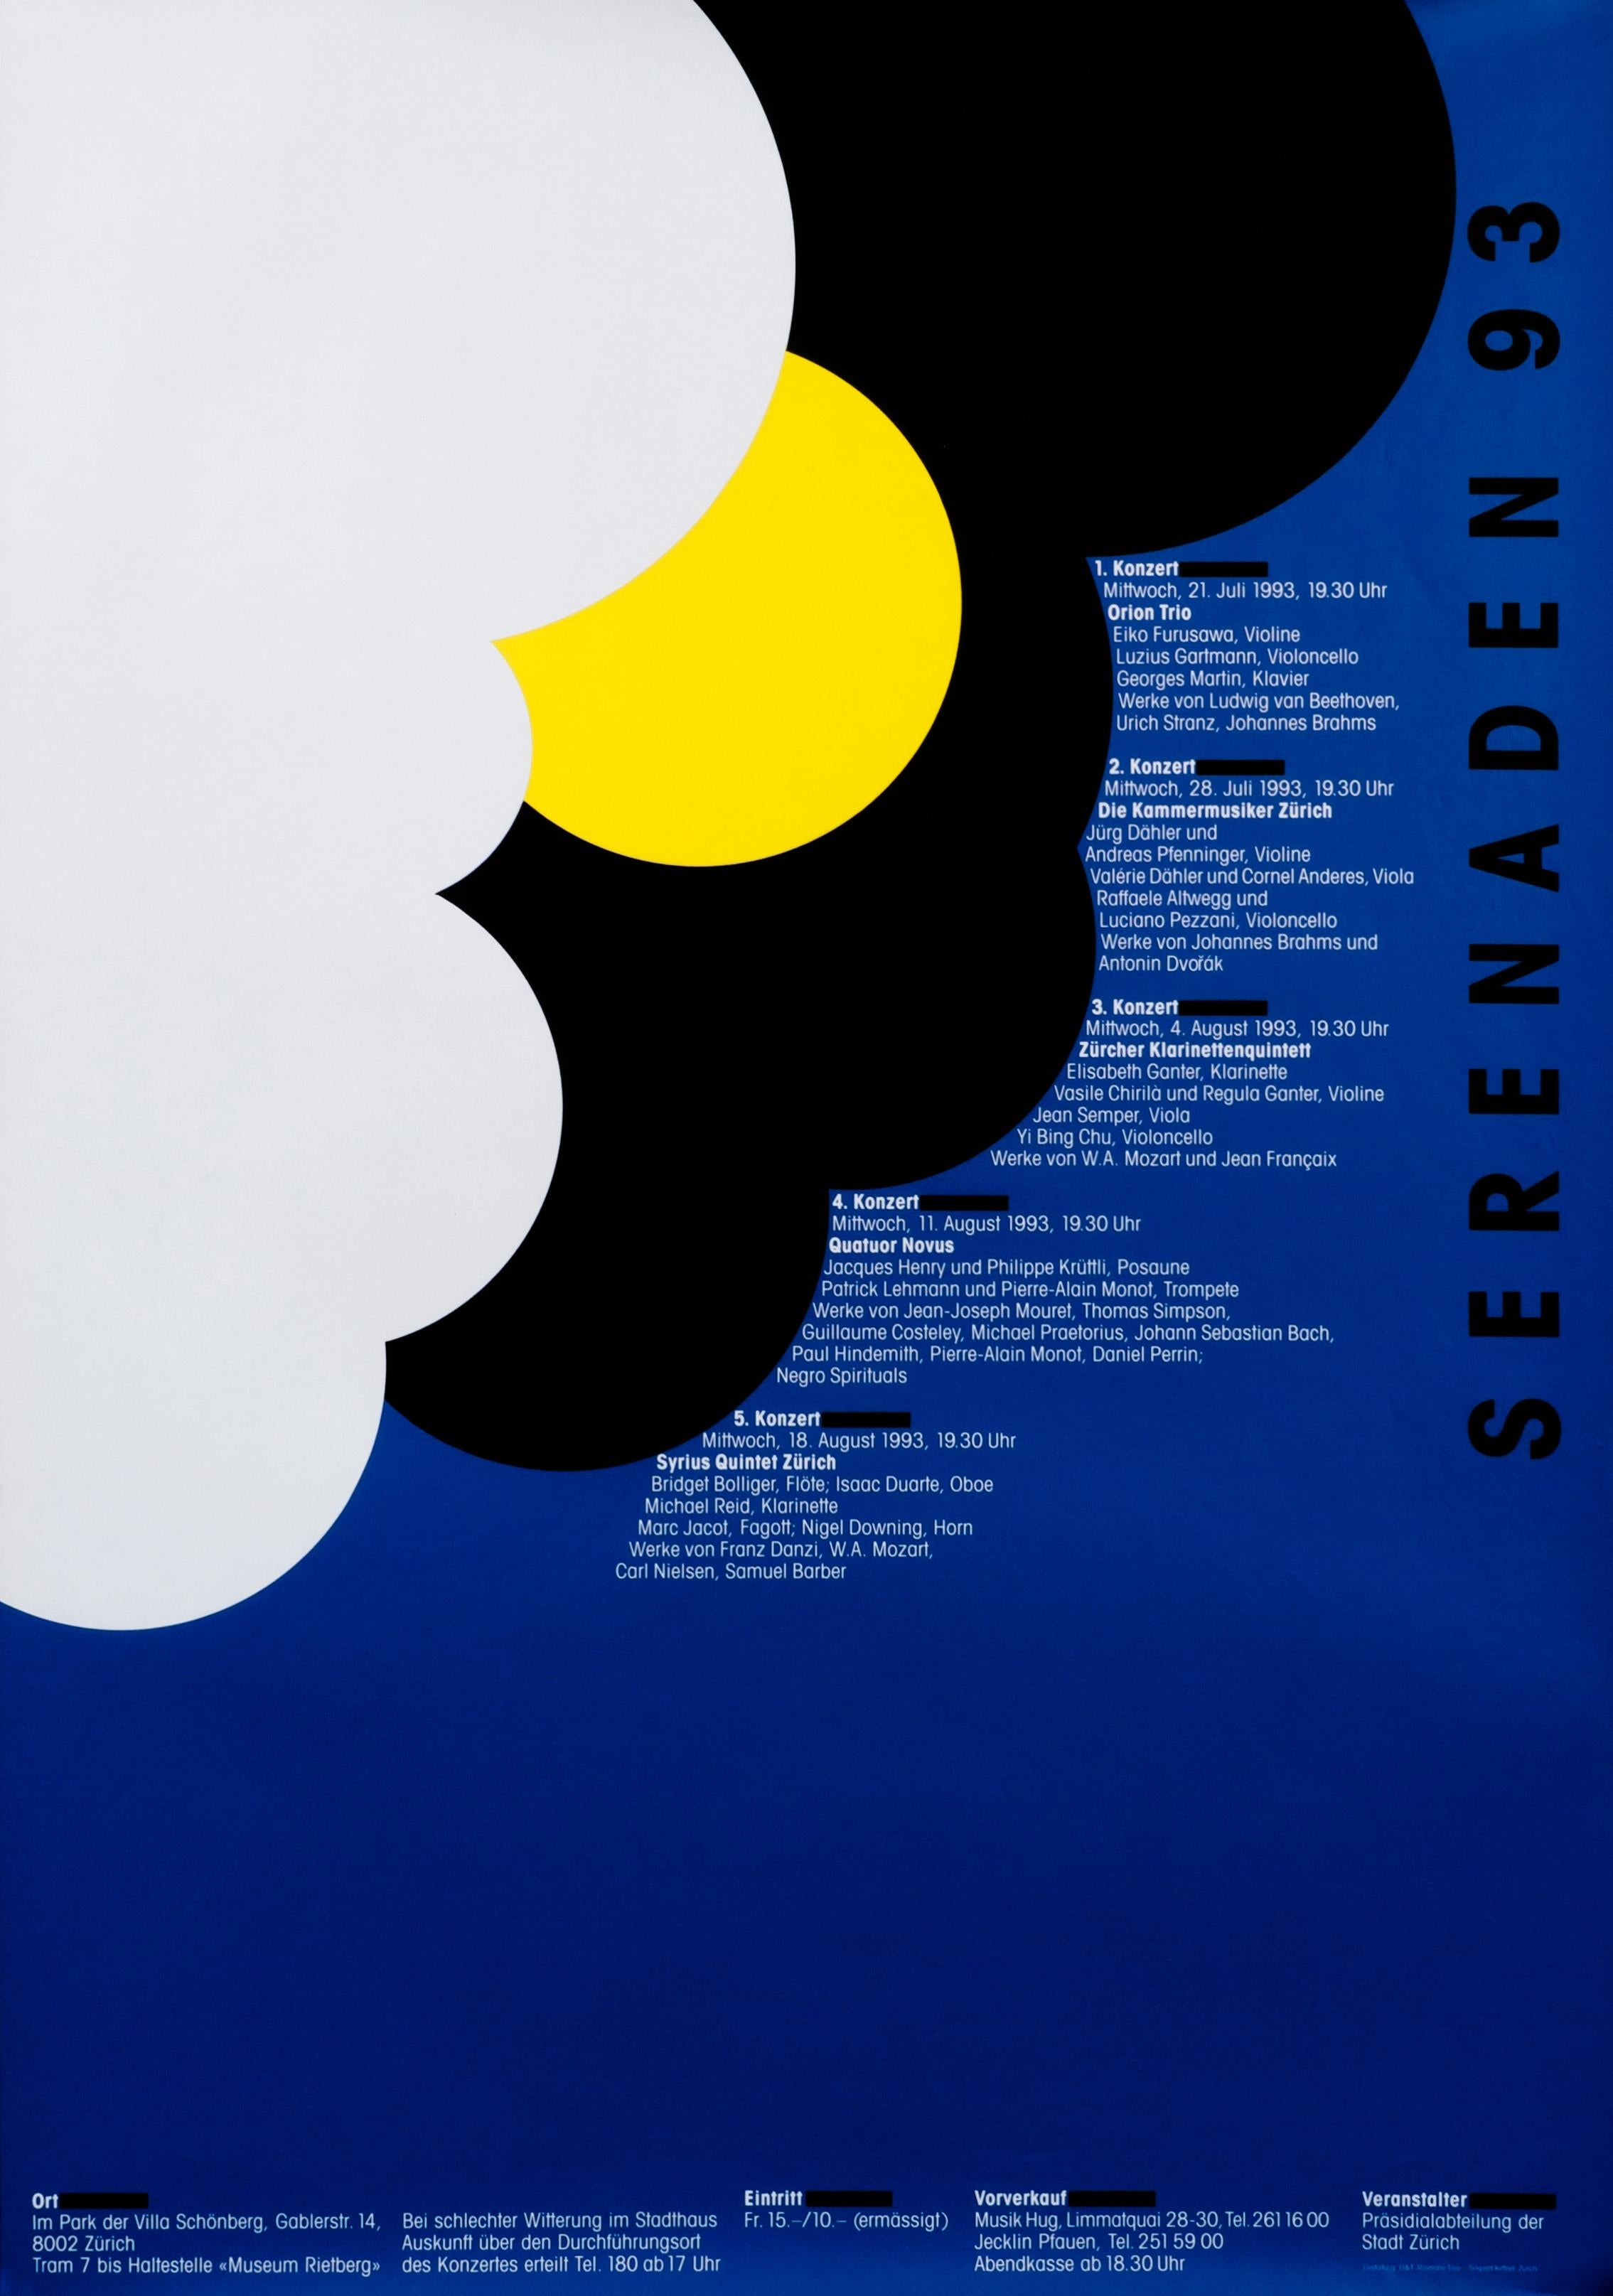 Rosmarie Tissi - "Serenaden 93" Swiss Post Modern Music Festival Original  Vintage Poster For Sale at 1stDibs